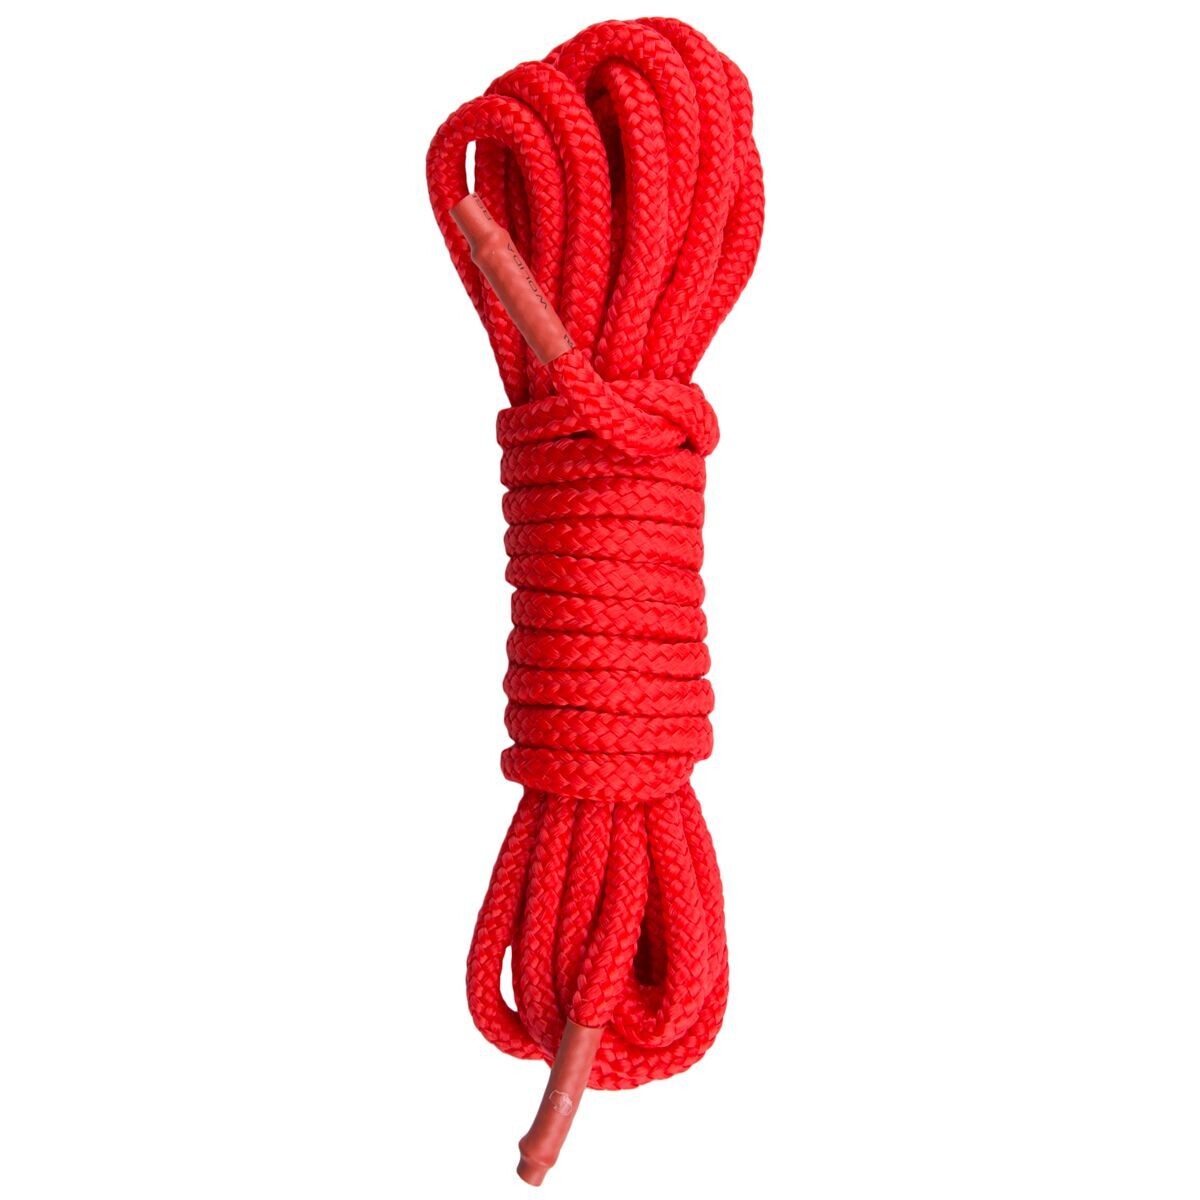 Easy Toys - Bondage Rope - 10m - Red